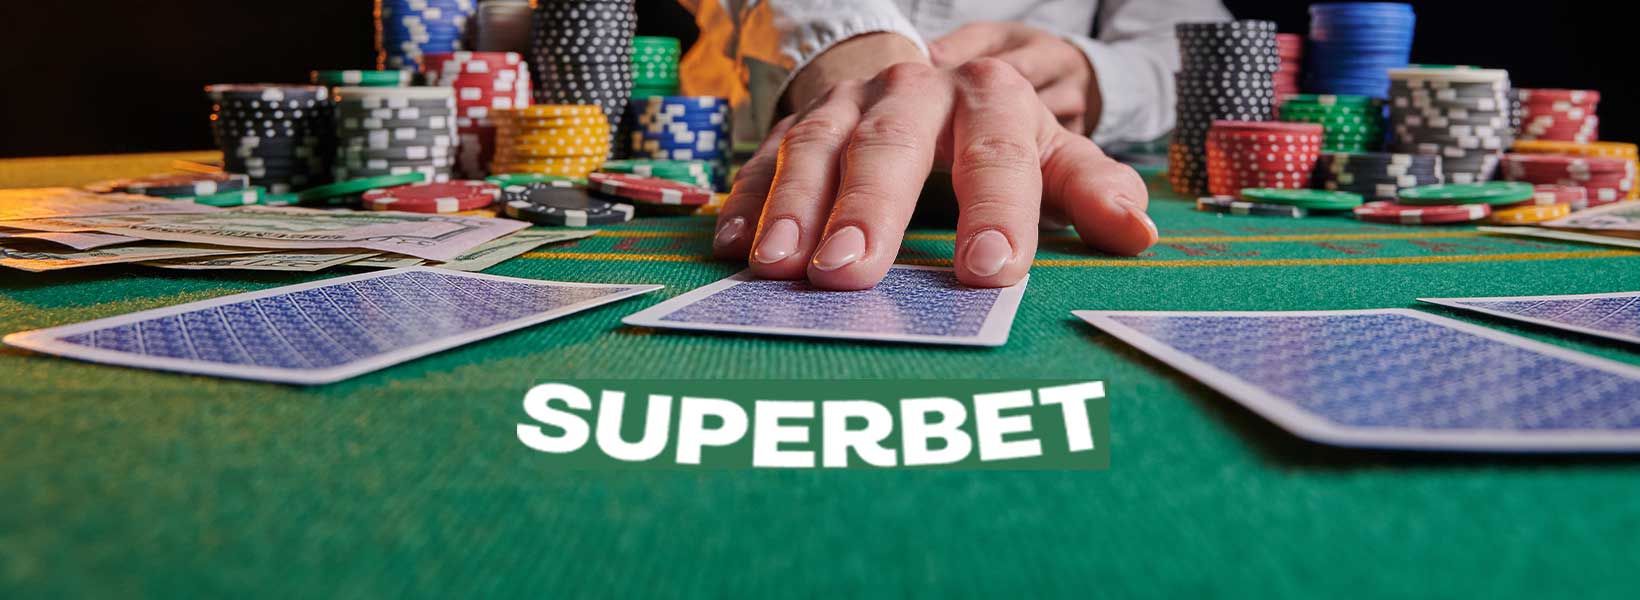 poker superbet online